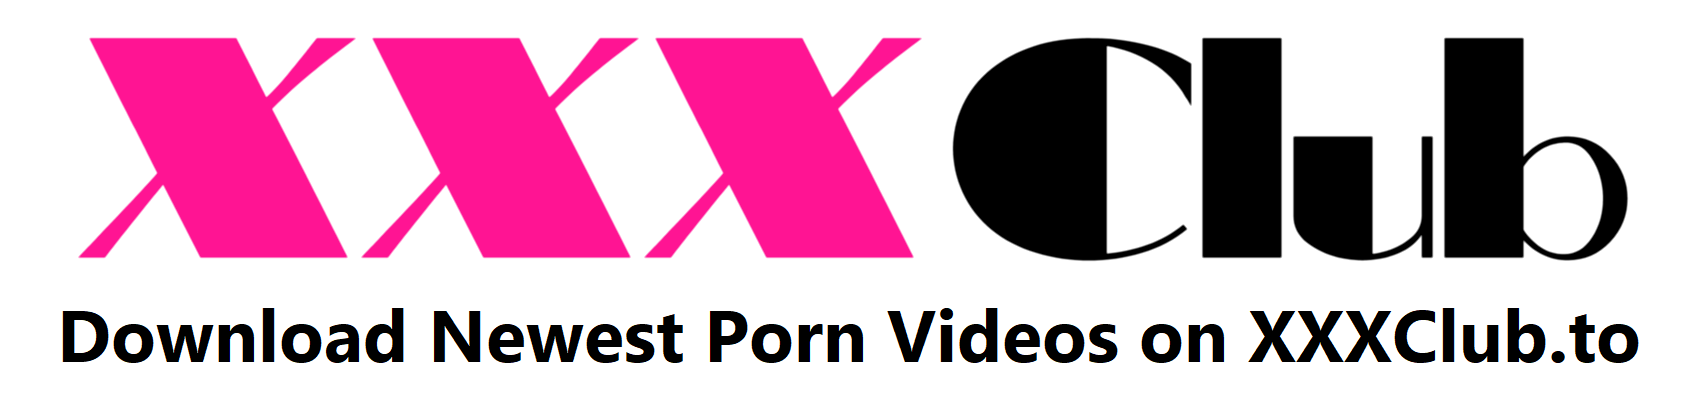 Download Latest Porn Videos on XXXClub.to